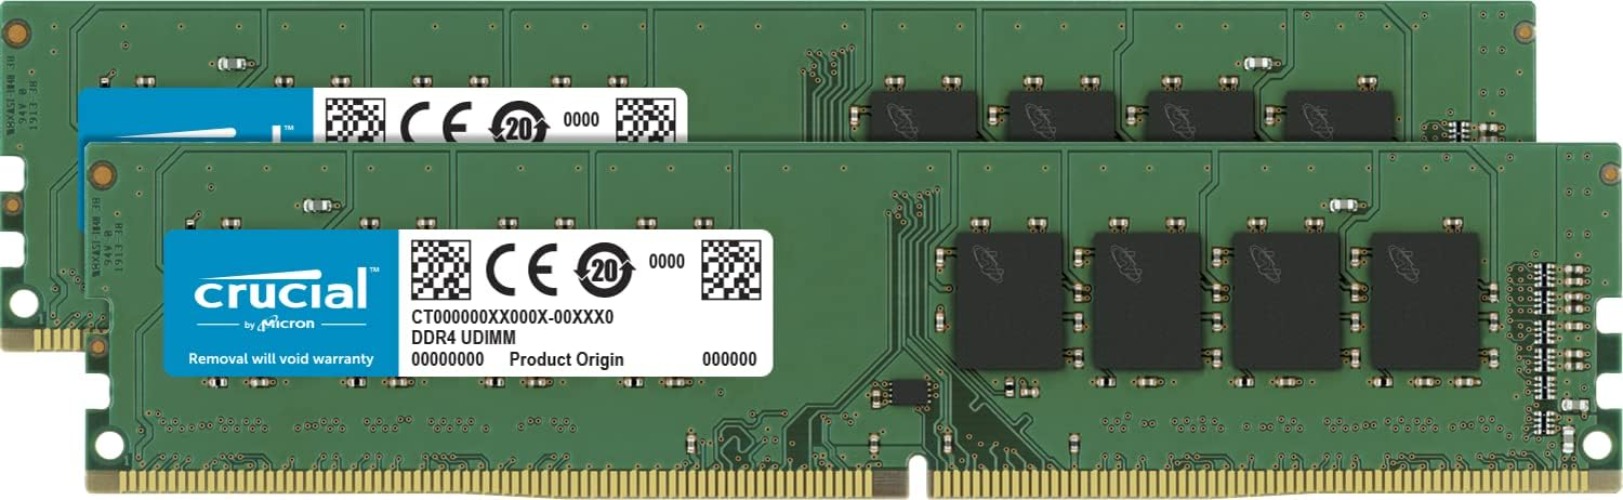 Crucial RAM 16GB Kit (2x8GB) DDR4 2400 MHz CL17 Desktop Memory CT2K8G4DFS824A - 16GB Kit (8GBx2) 2400MHz